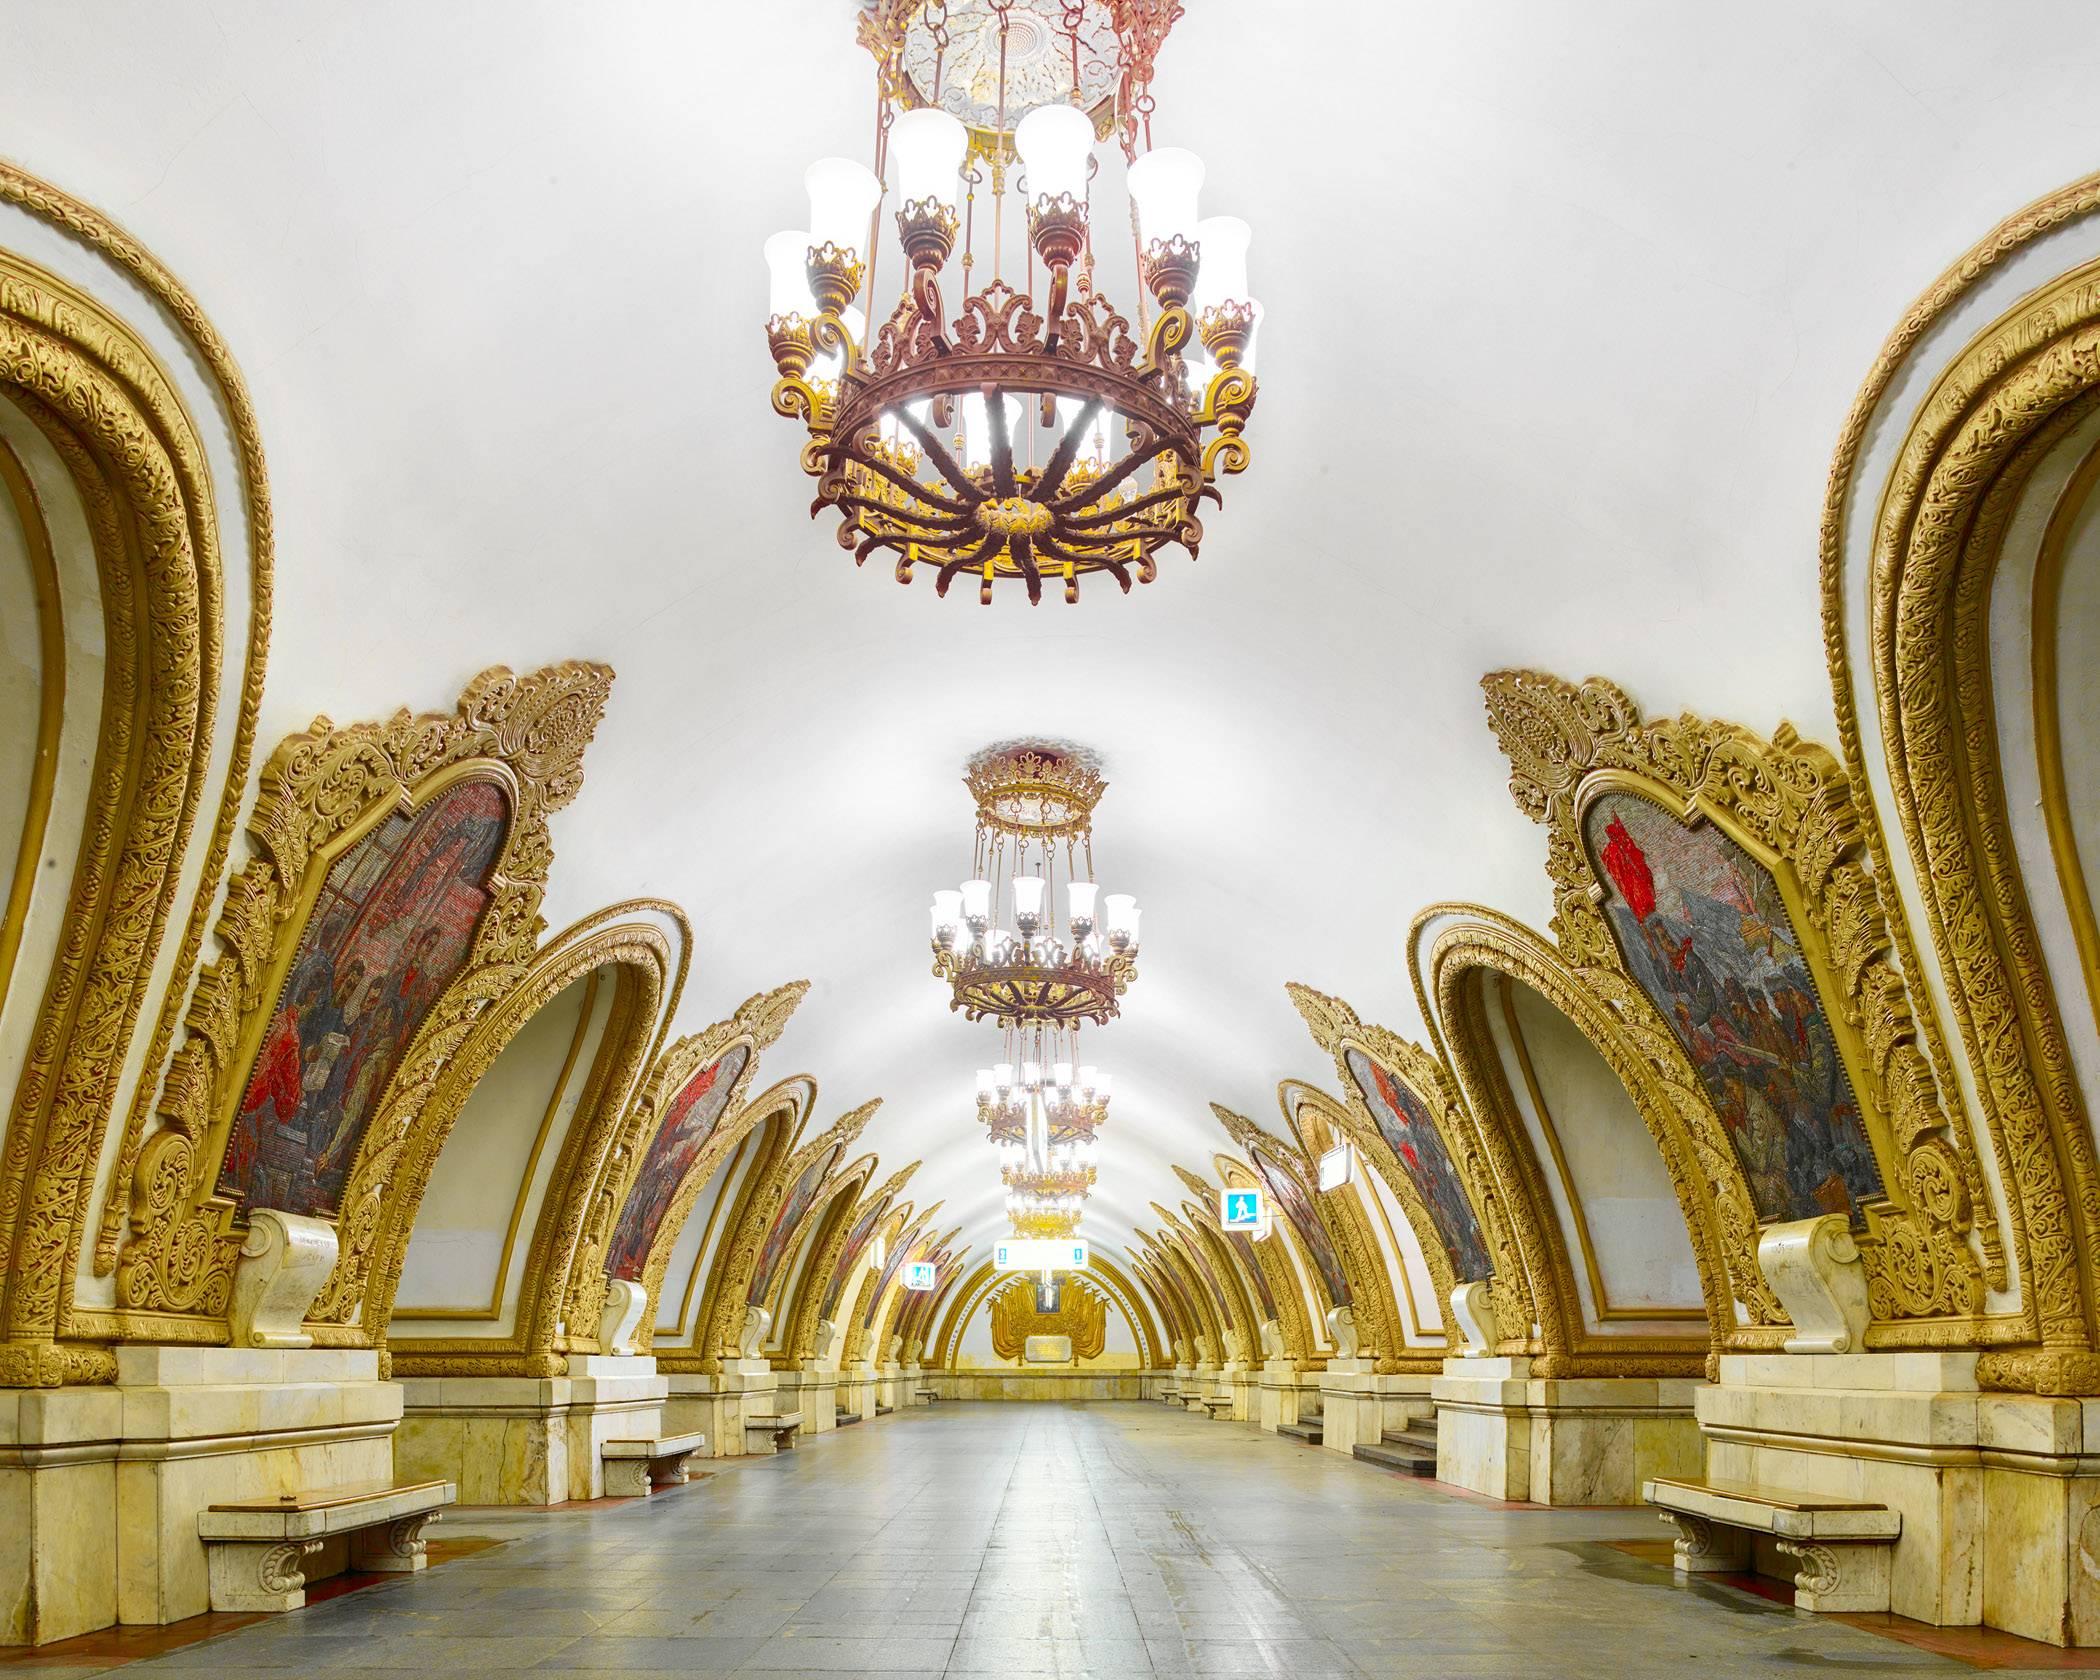 Kiyevsskaya Metro Station (east), Moscow, Russia, 2015 - Photograph by David Burdeny